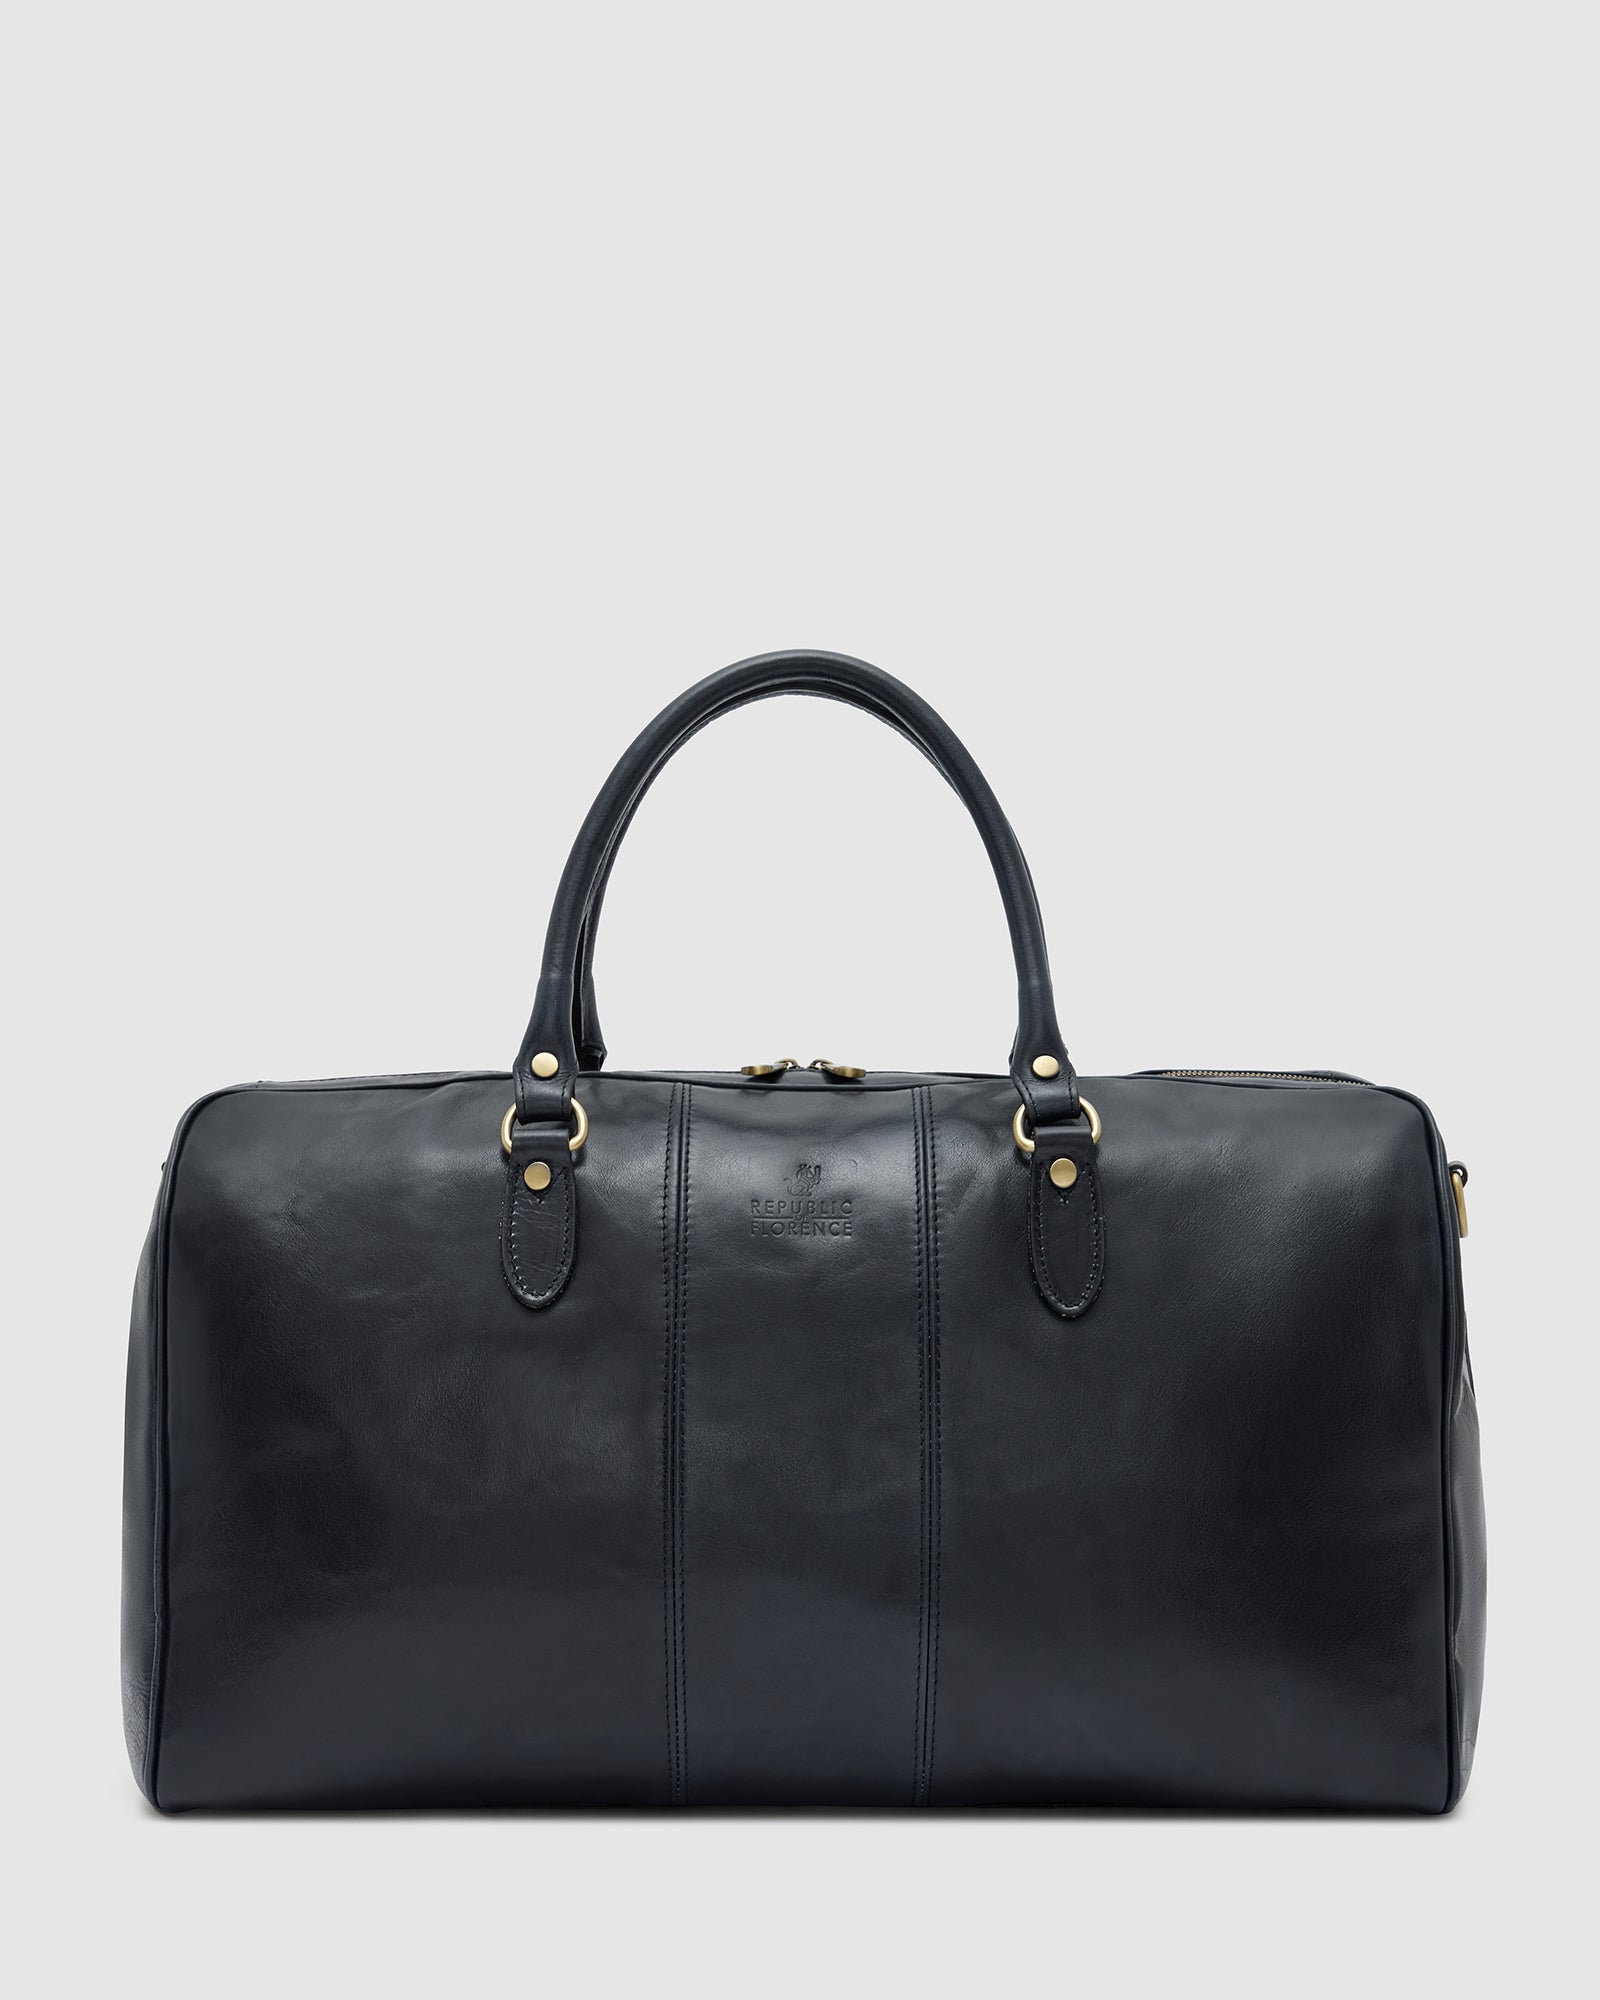 Albertis Blue - Leather Duffle Bag